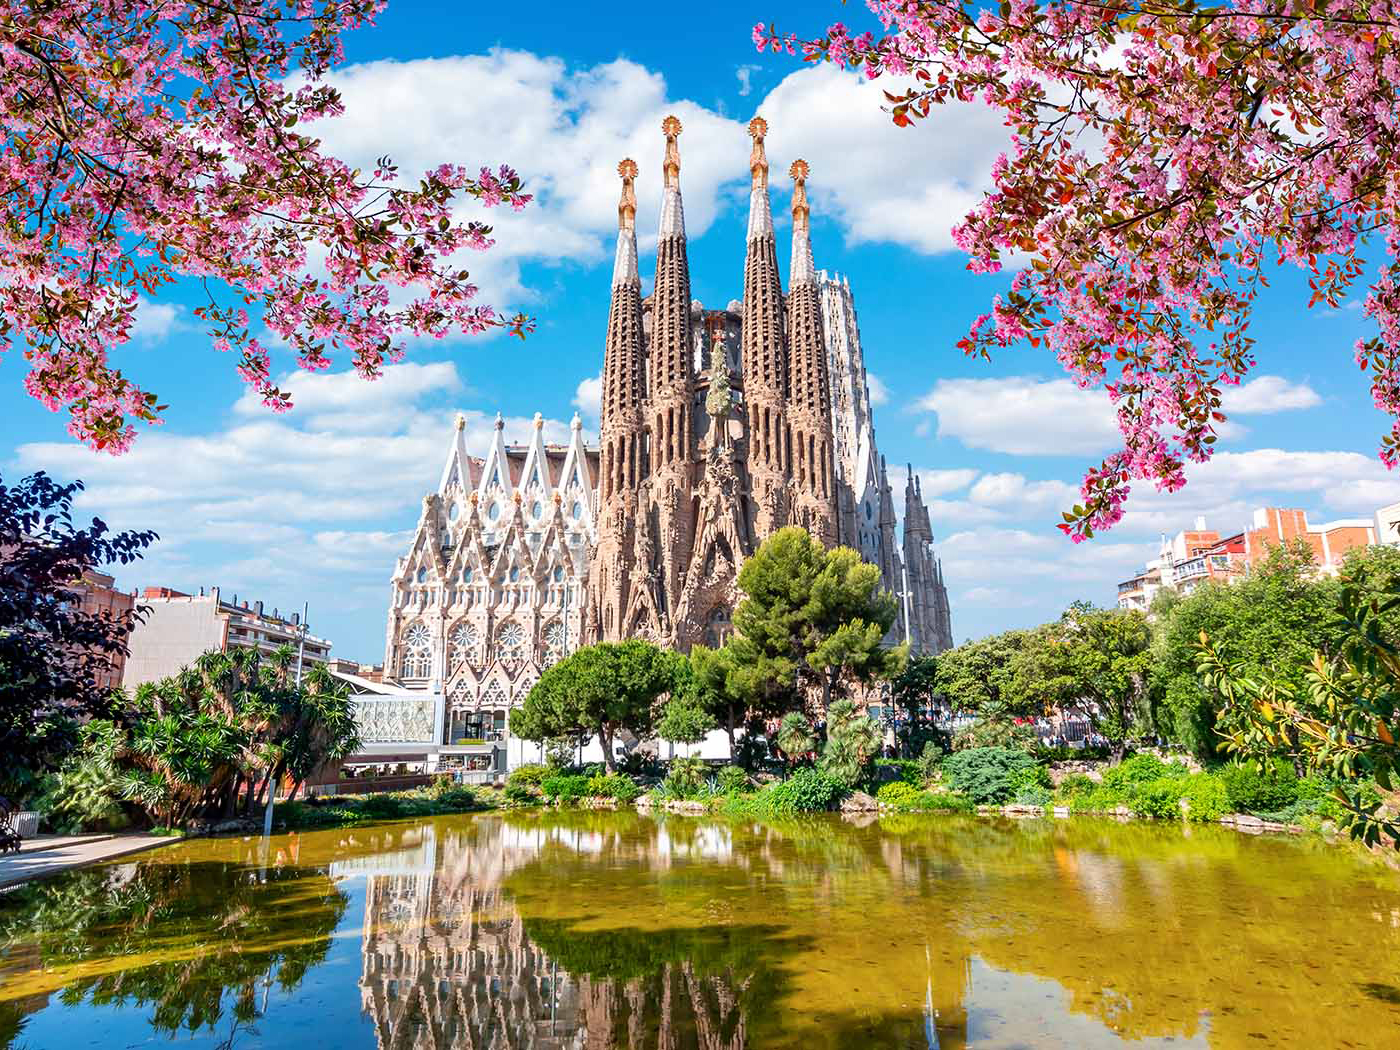 Best Destination for First Europe Trip - Barcelona, Spain